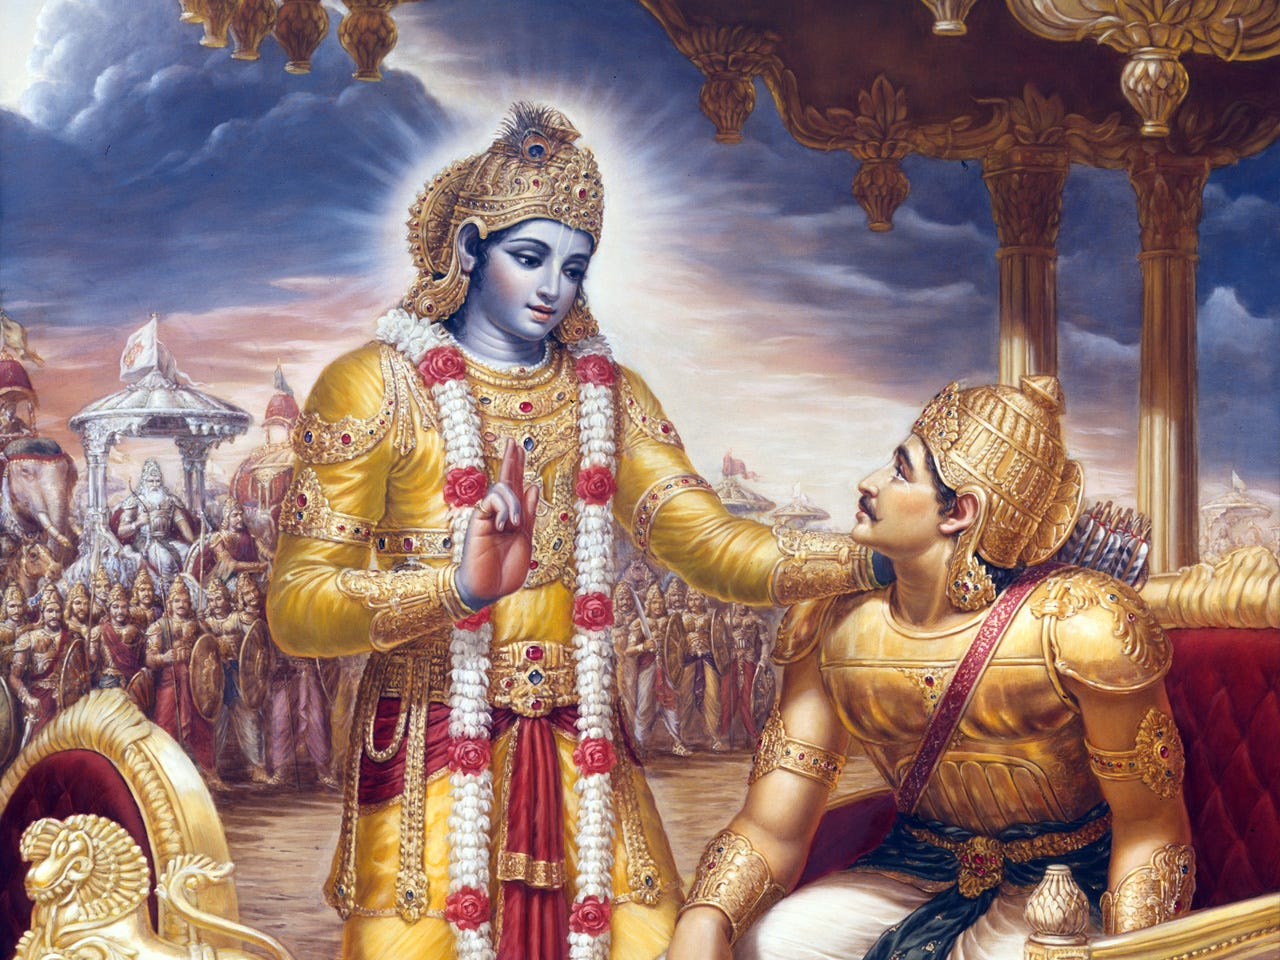 Krishna speaks to Arjuna